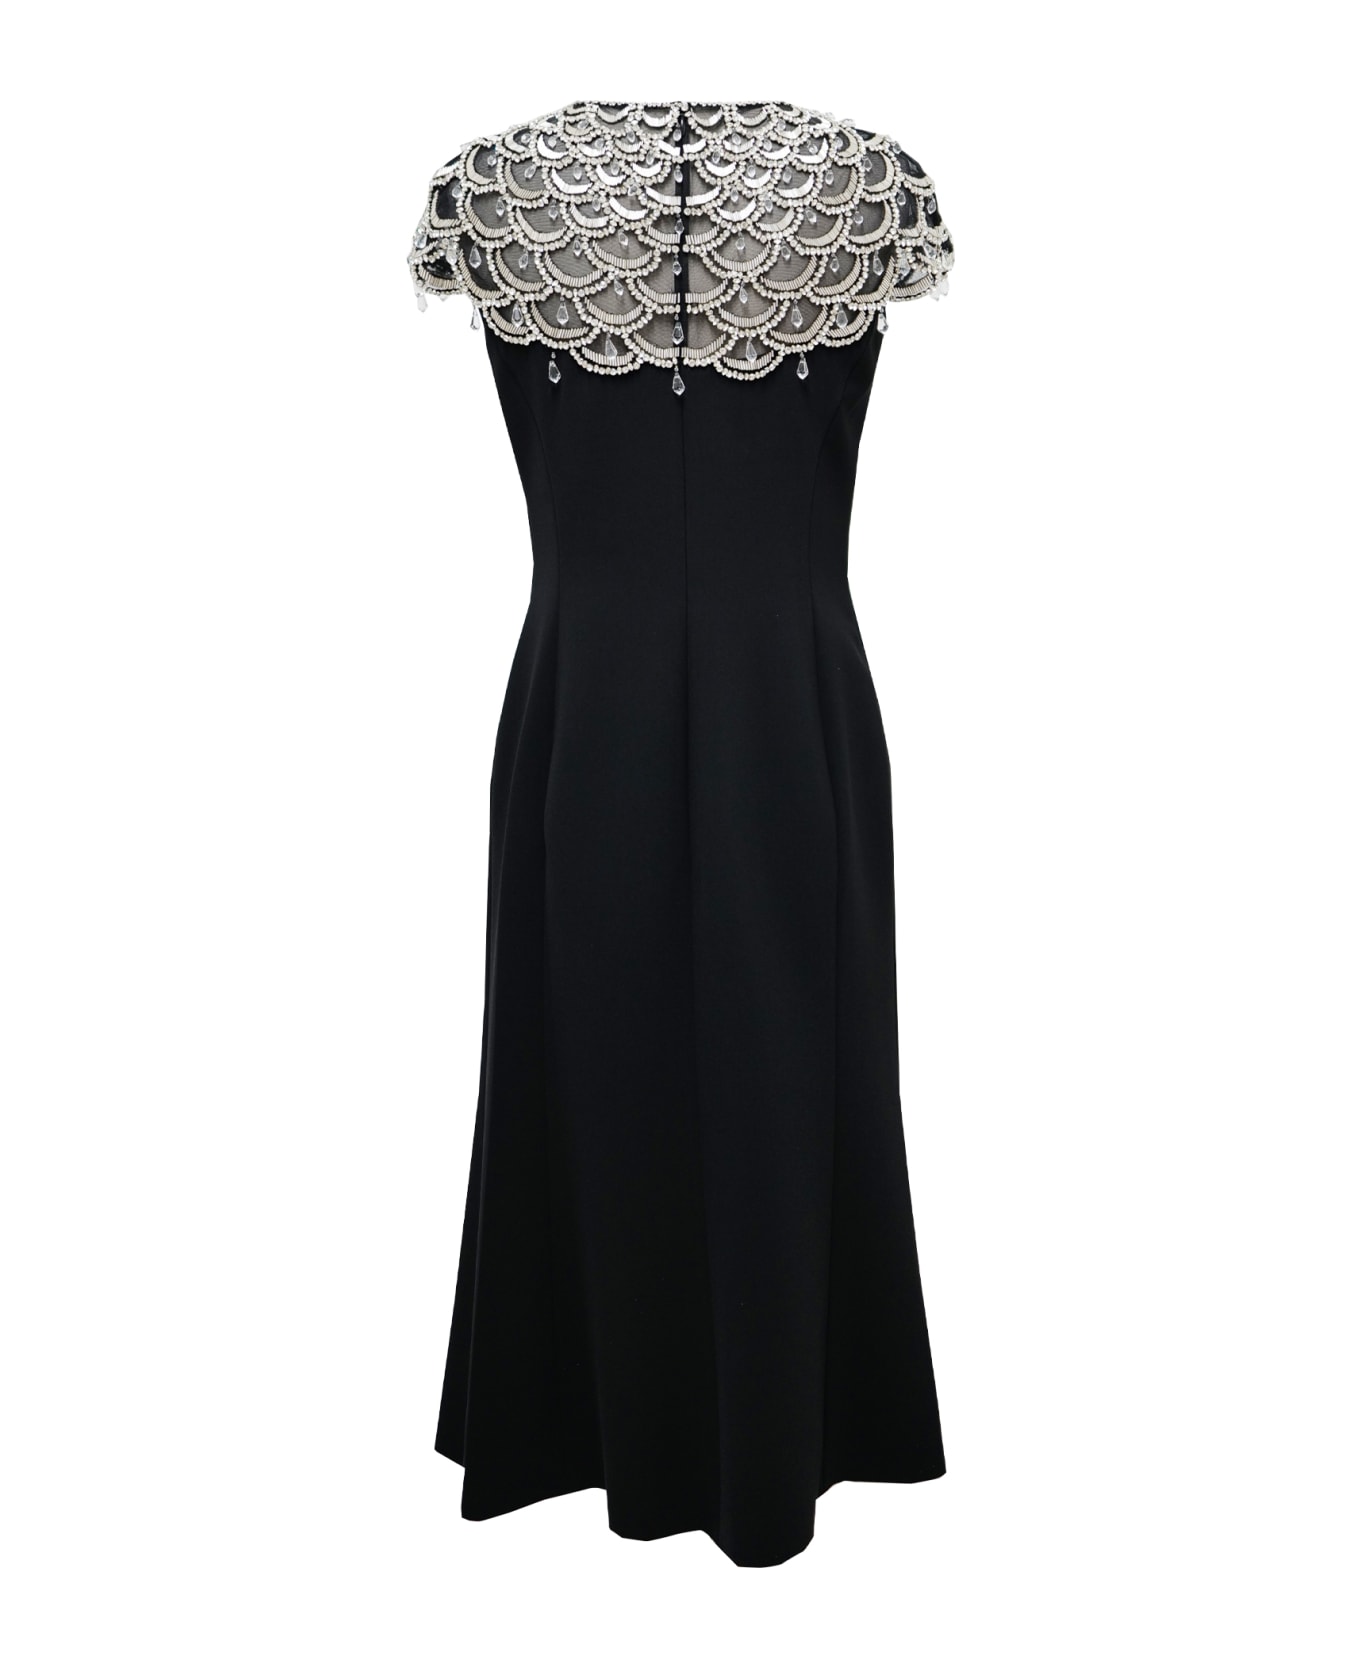 Jenny Packham Dress - Black